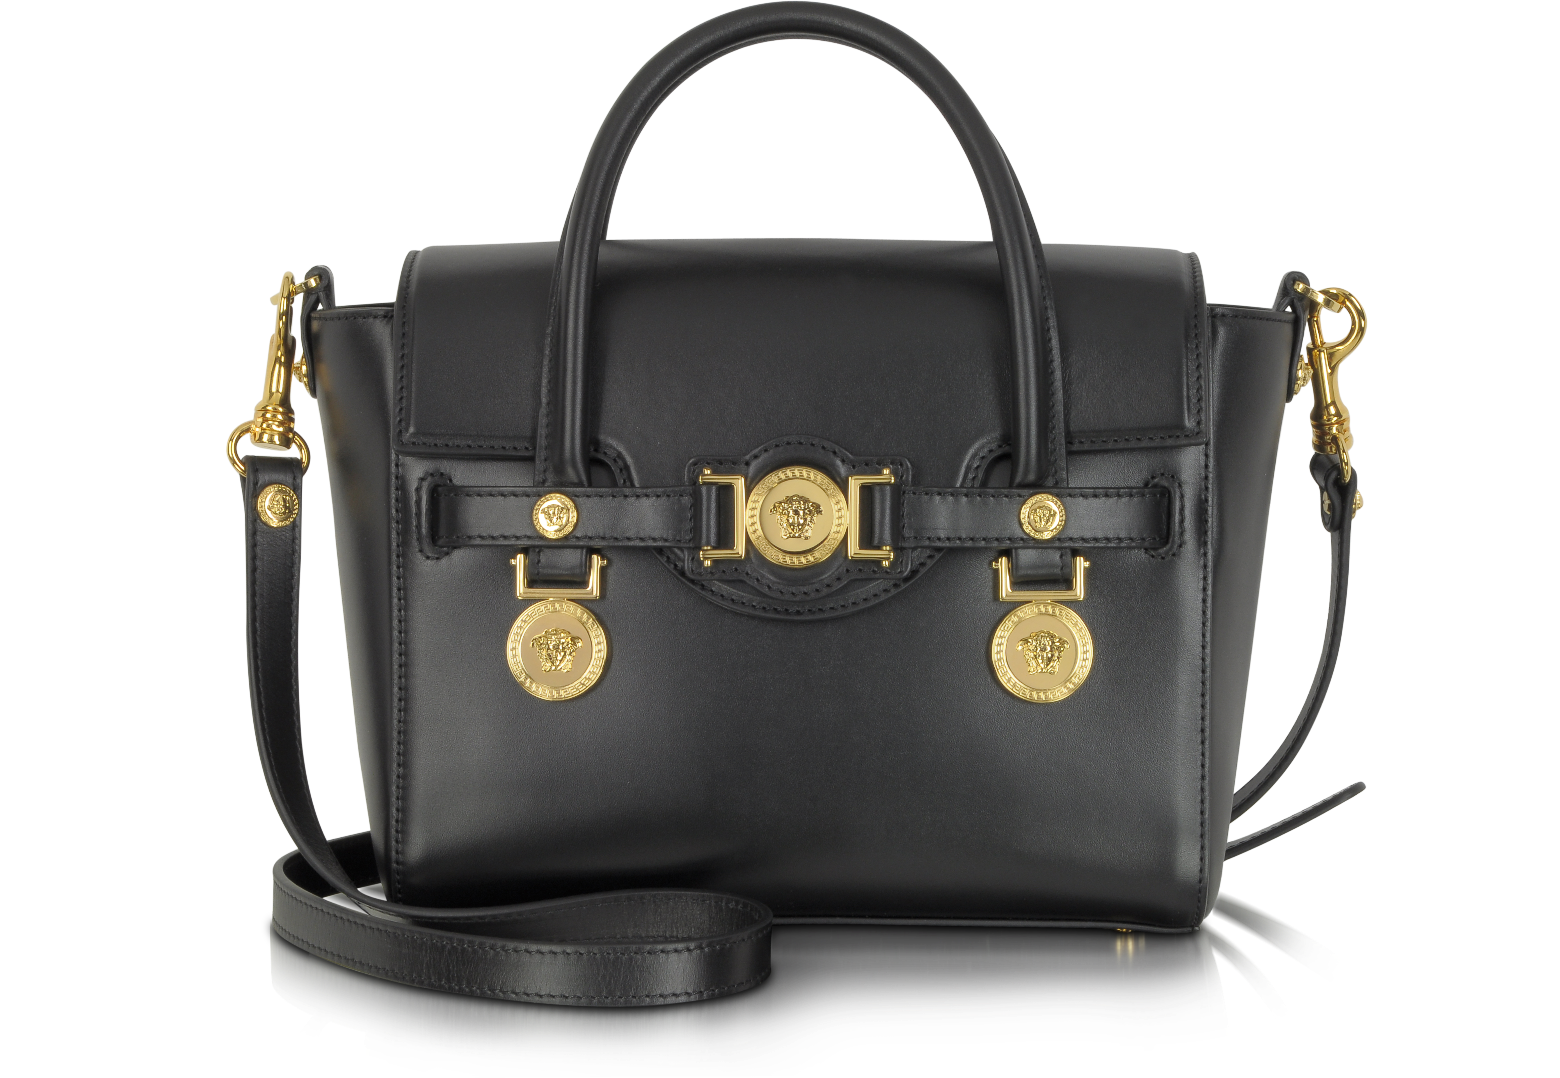 Versace Golden Signature Black Leather Satchel Bag at FORZIERI